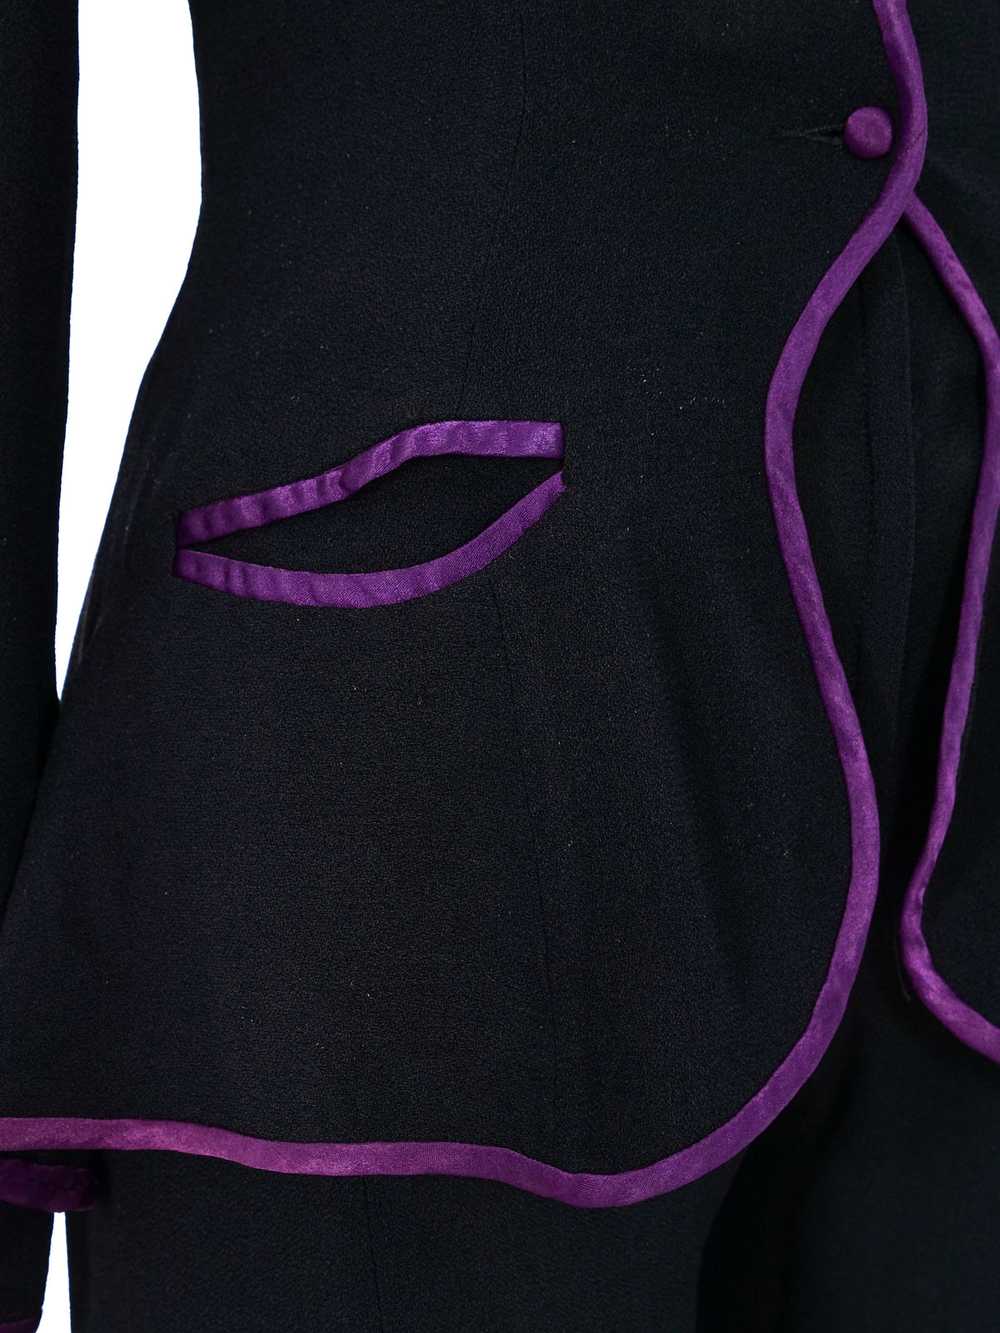 Ossie Clark Black Crepe Judy Pant Suit - image 2